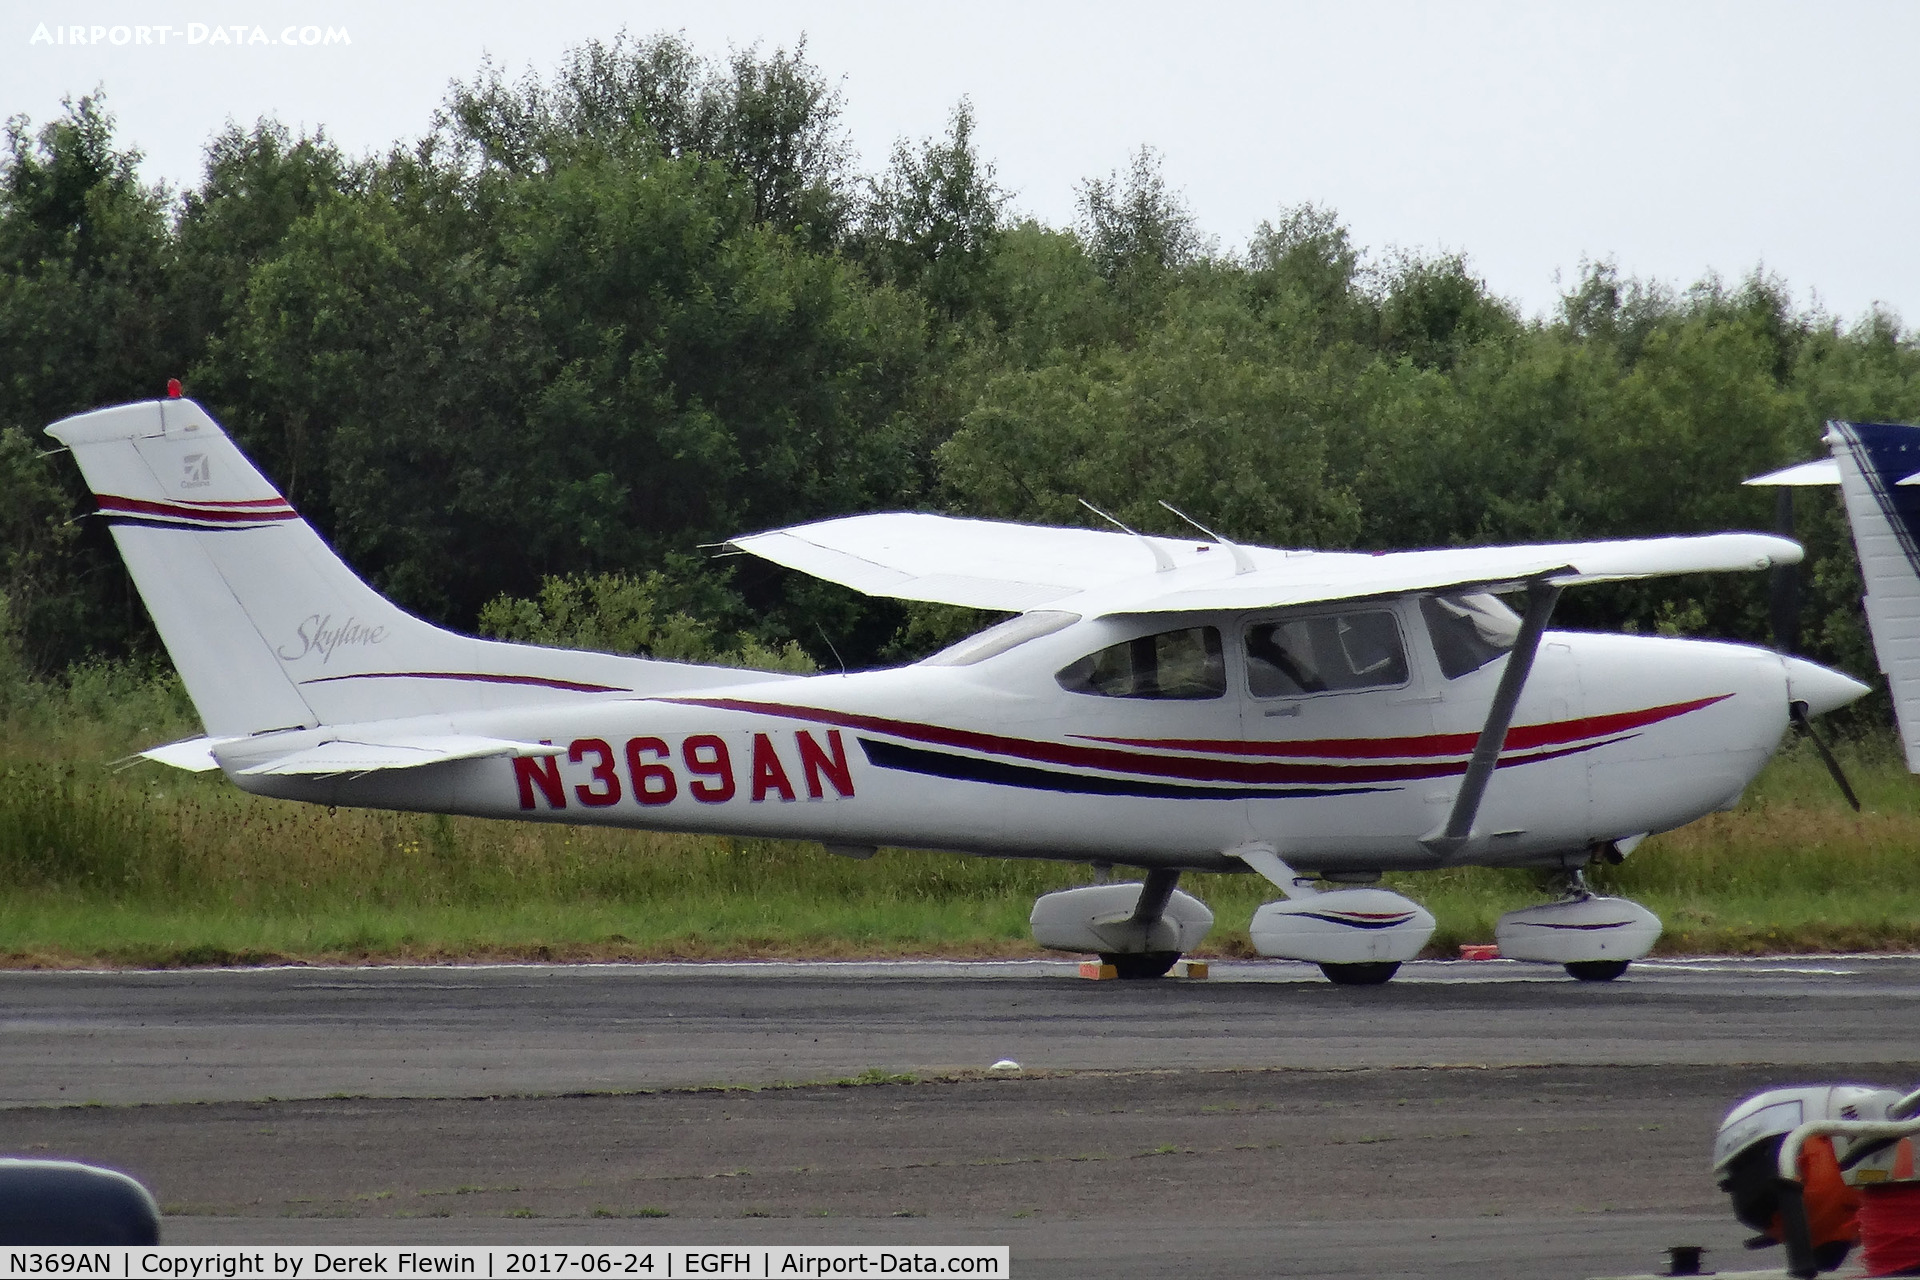 N369AN, 2000 Cessna 182S Skylane C/N 18280696, Skylane, Jersey Channel Islands based, previously N2469F, seen parked up.